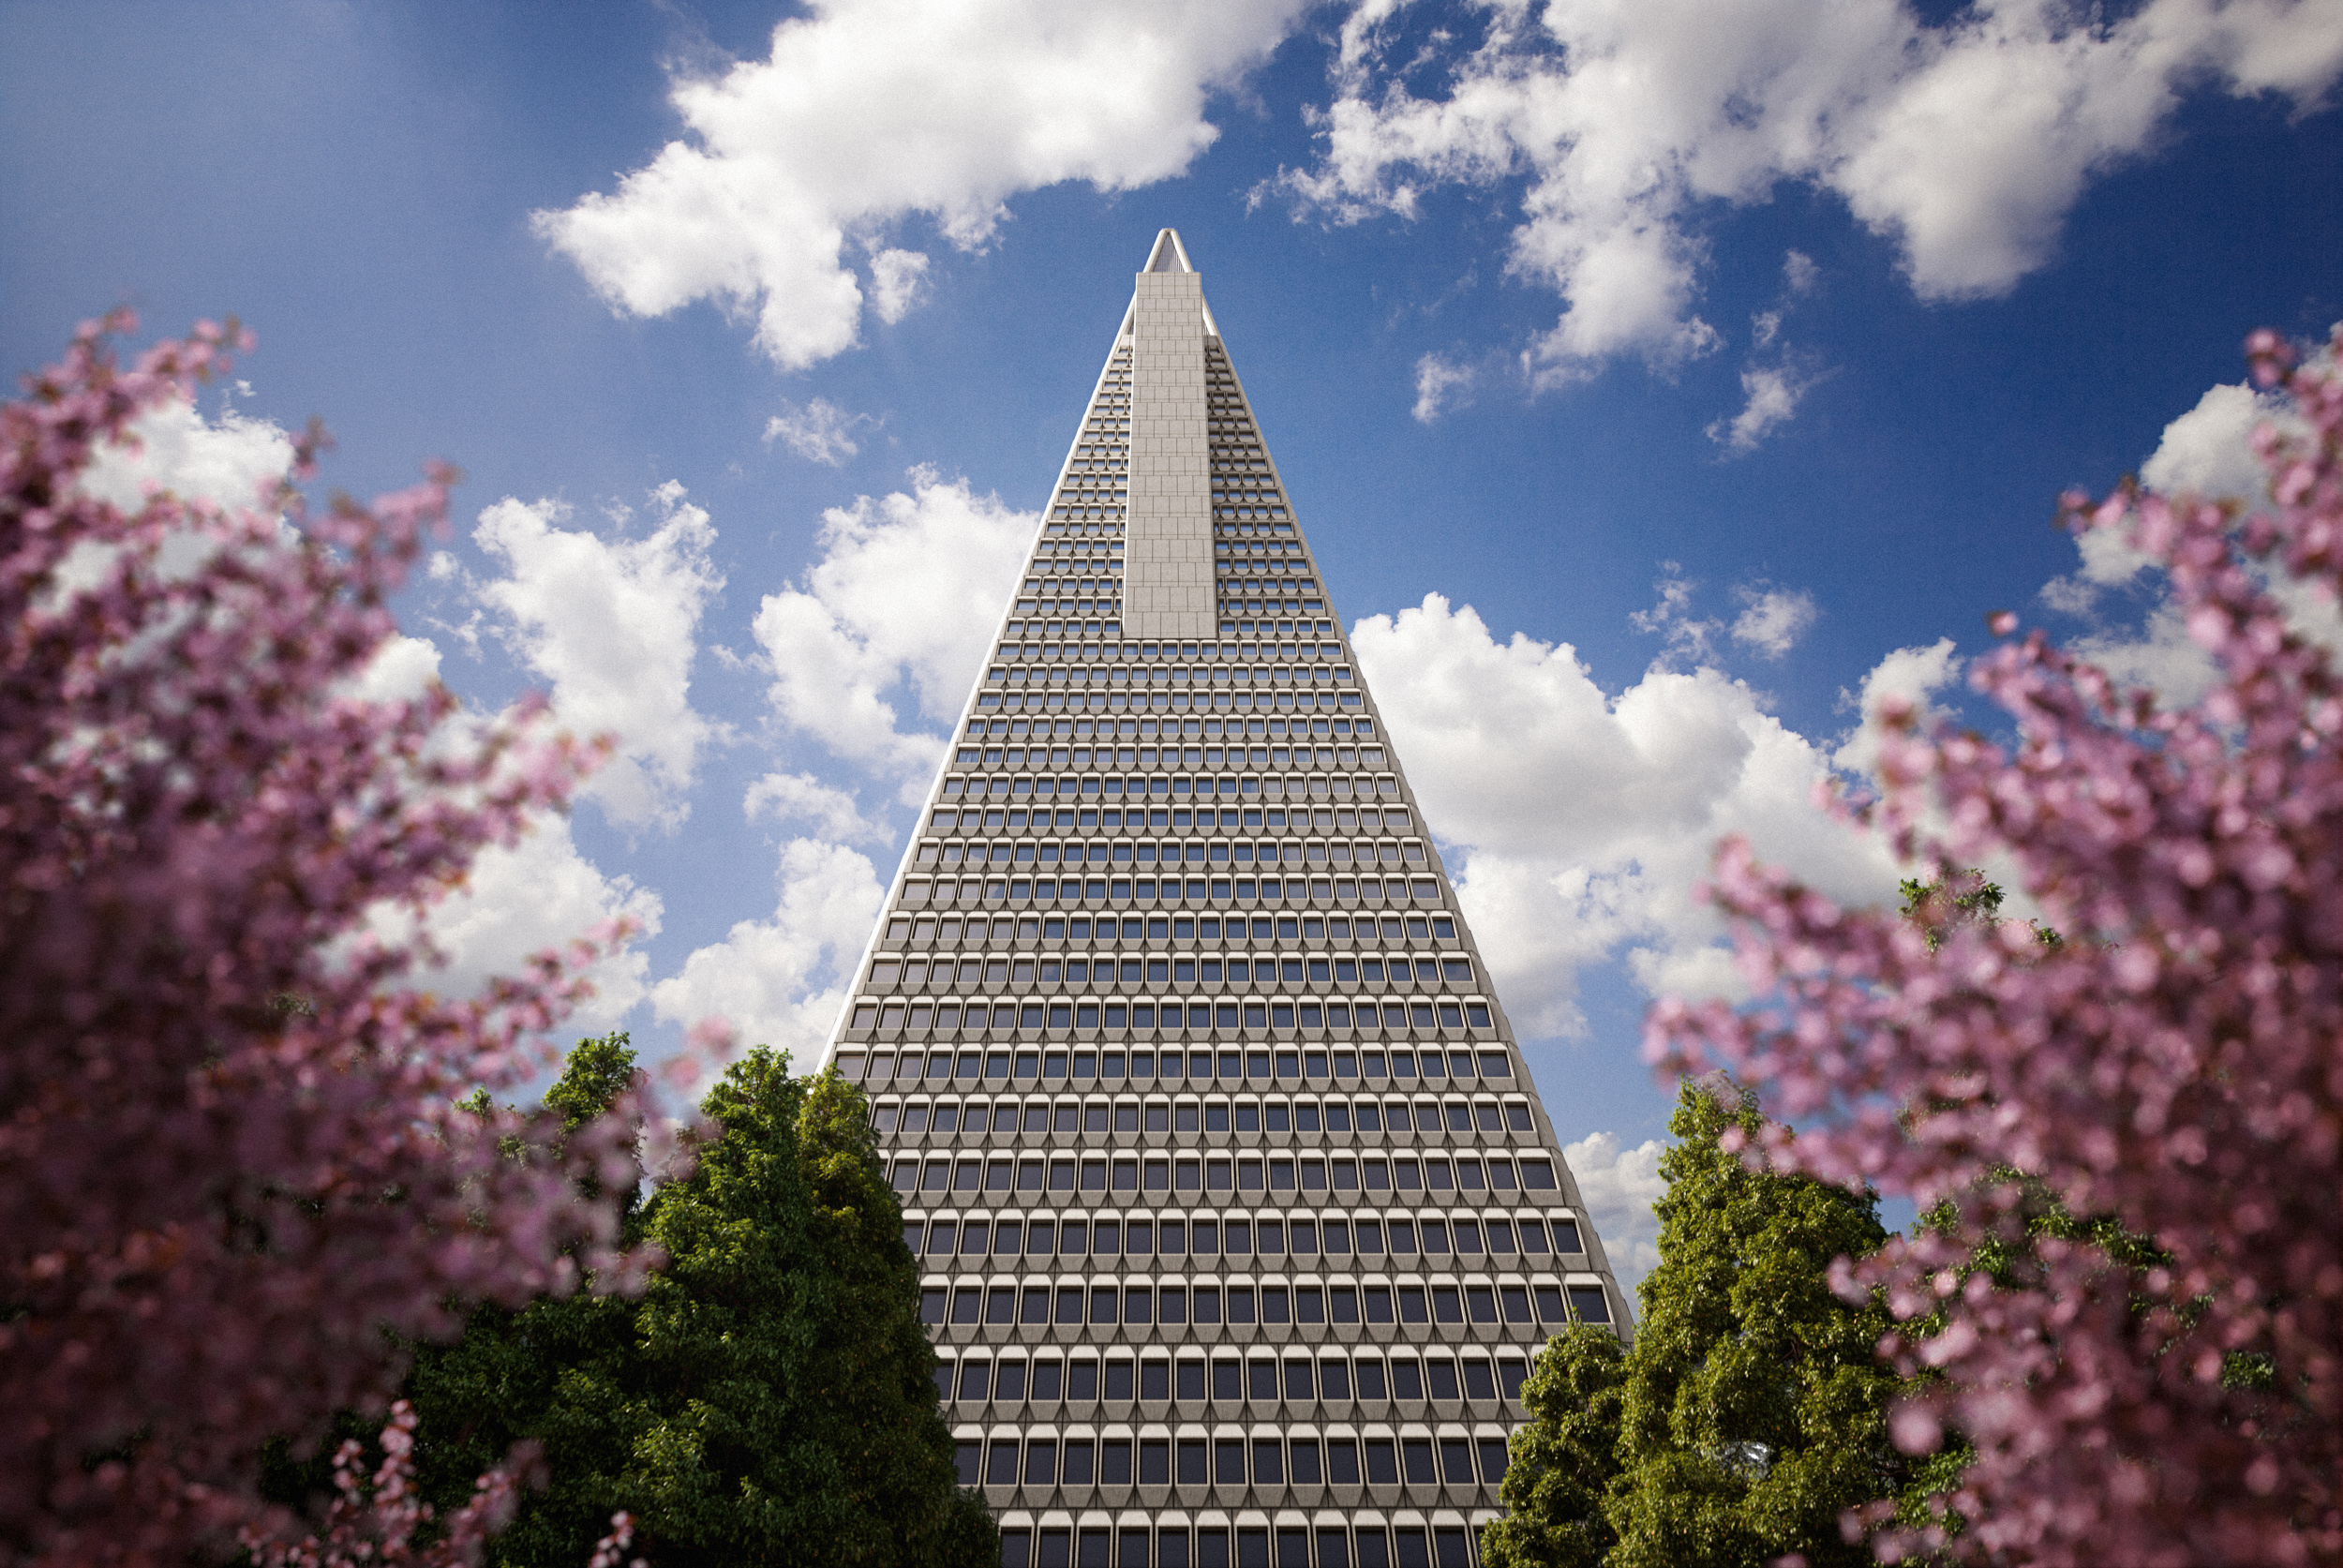 Transamerica Pyramid Looking Up, rendering by DBOX